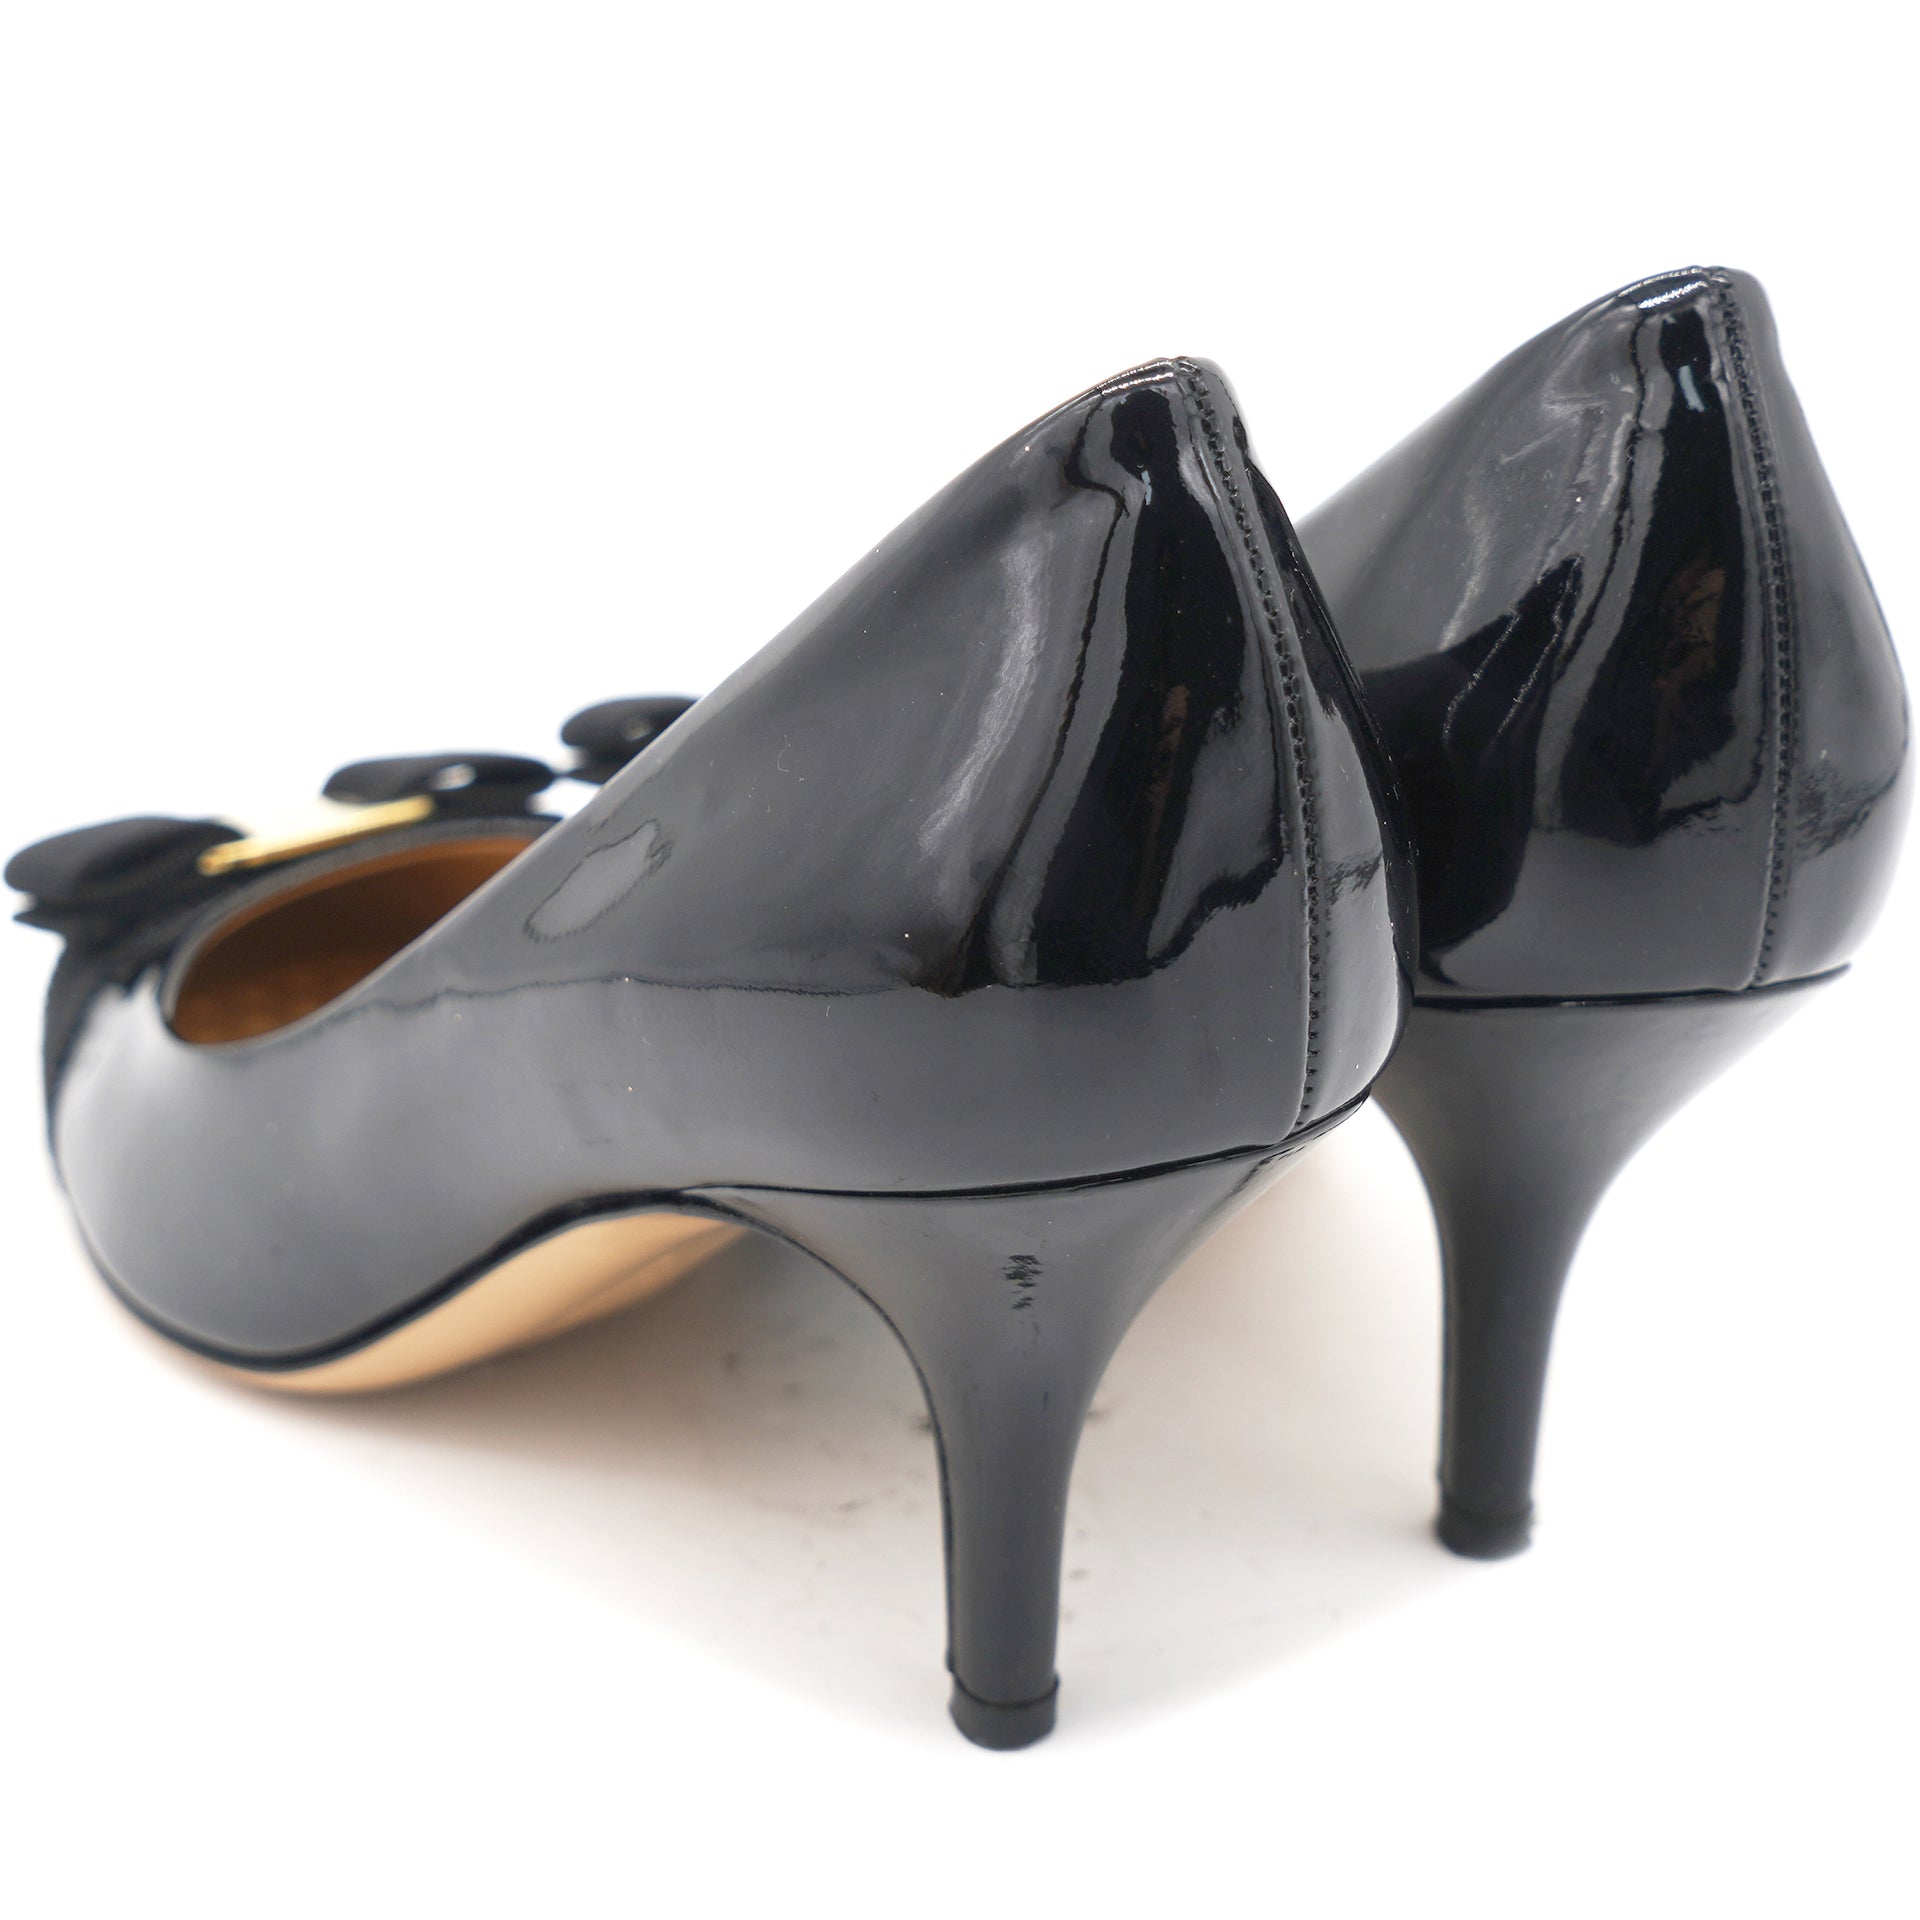 Vara Bow Pump Shoes Black 7/37.5